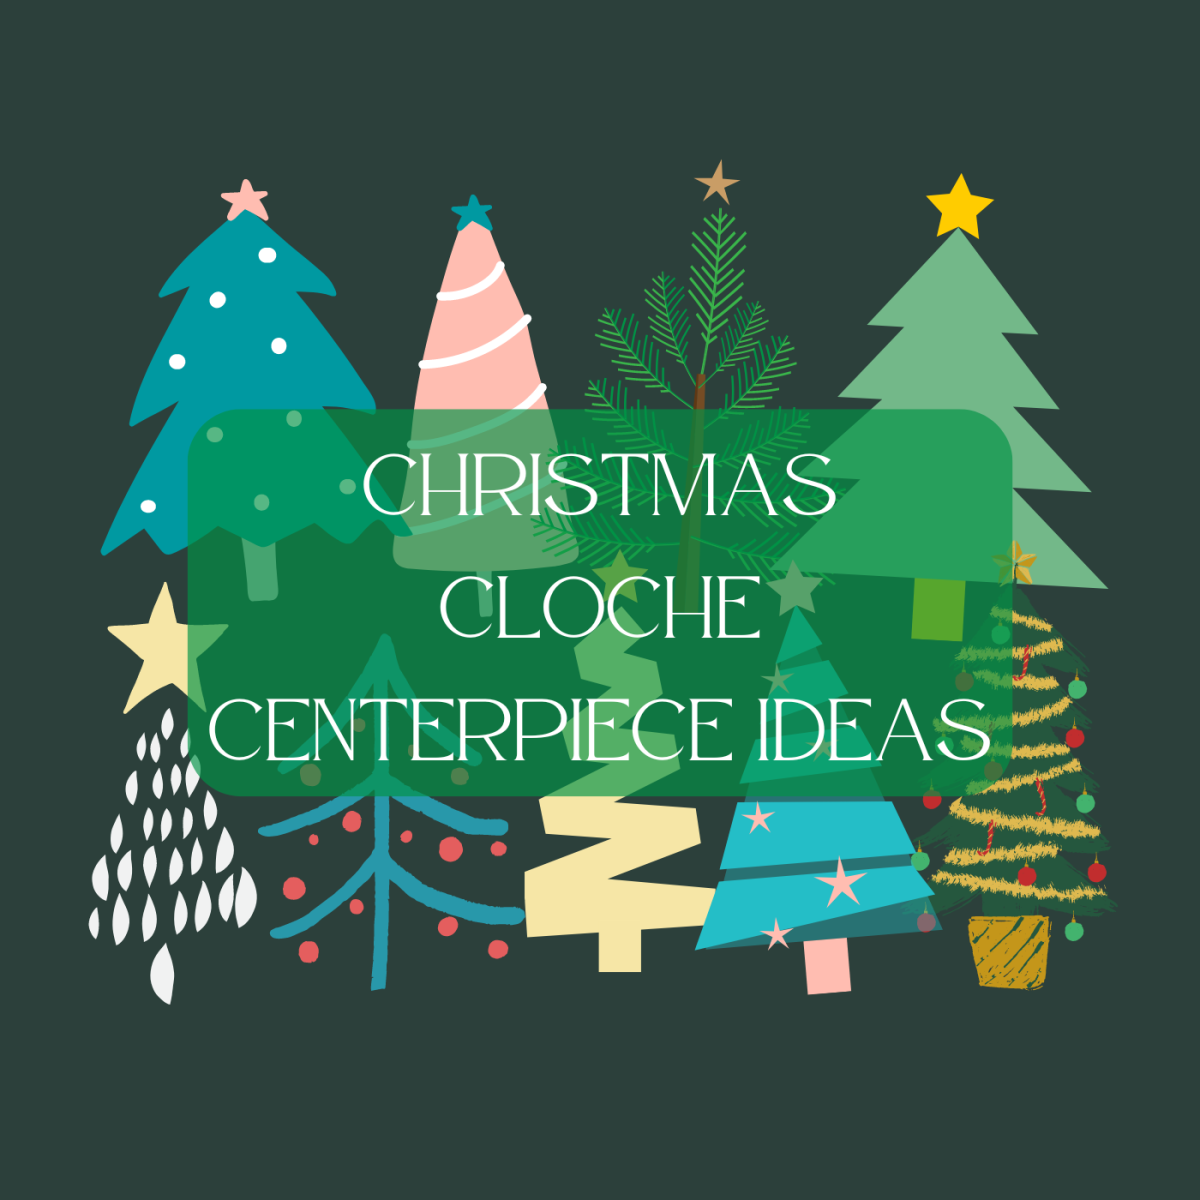 75+ Stunning Christmas Cloche Ideas for a Magical Centerpiece